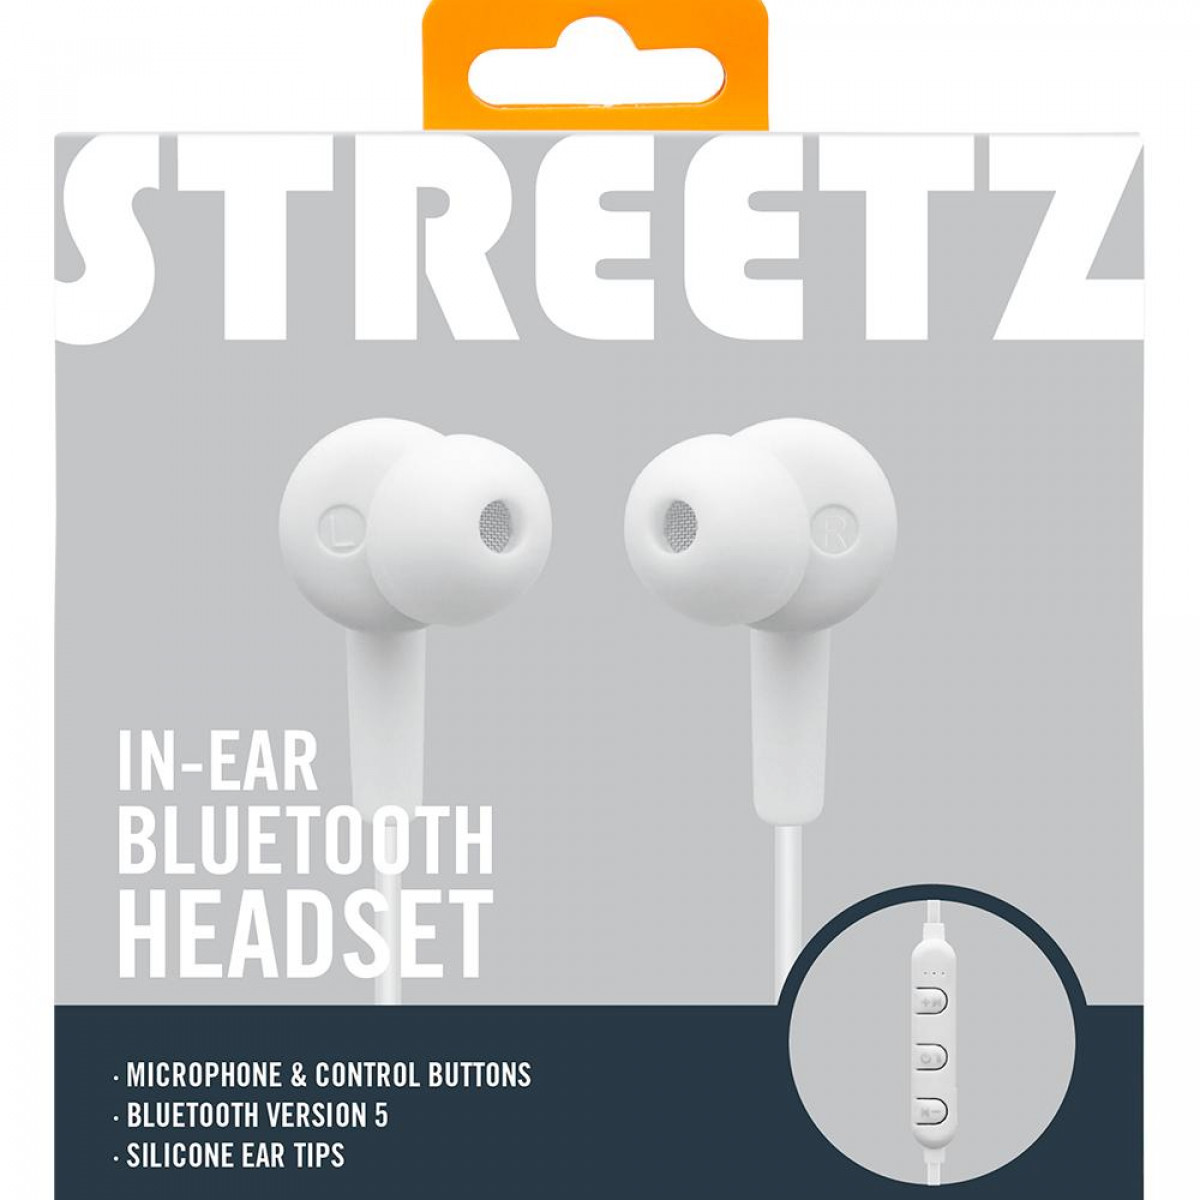 STREETZ STREETZ und Kopfhörer Mikrofon Medien-/Antworttasten, In-ear BT-Kopfhörer weiß mit In-Ear we, In-ear